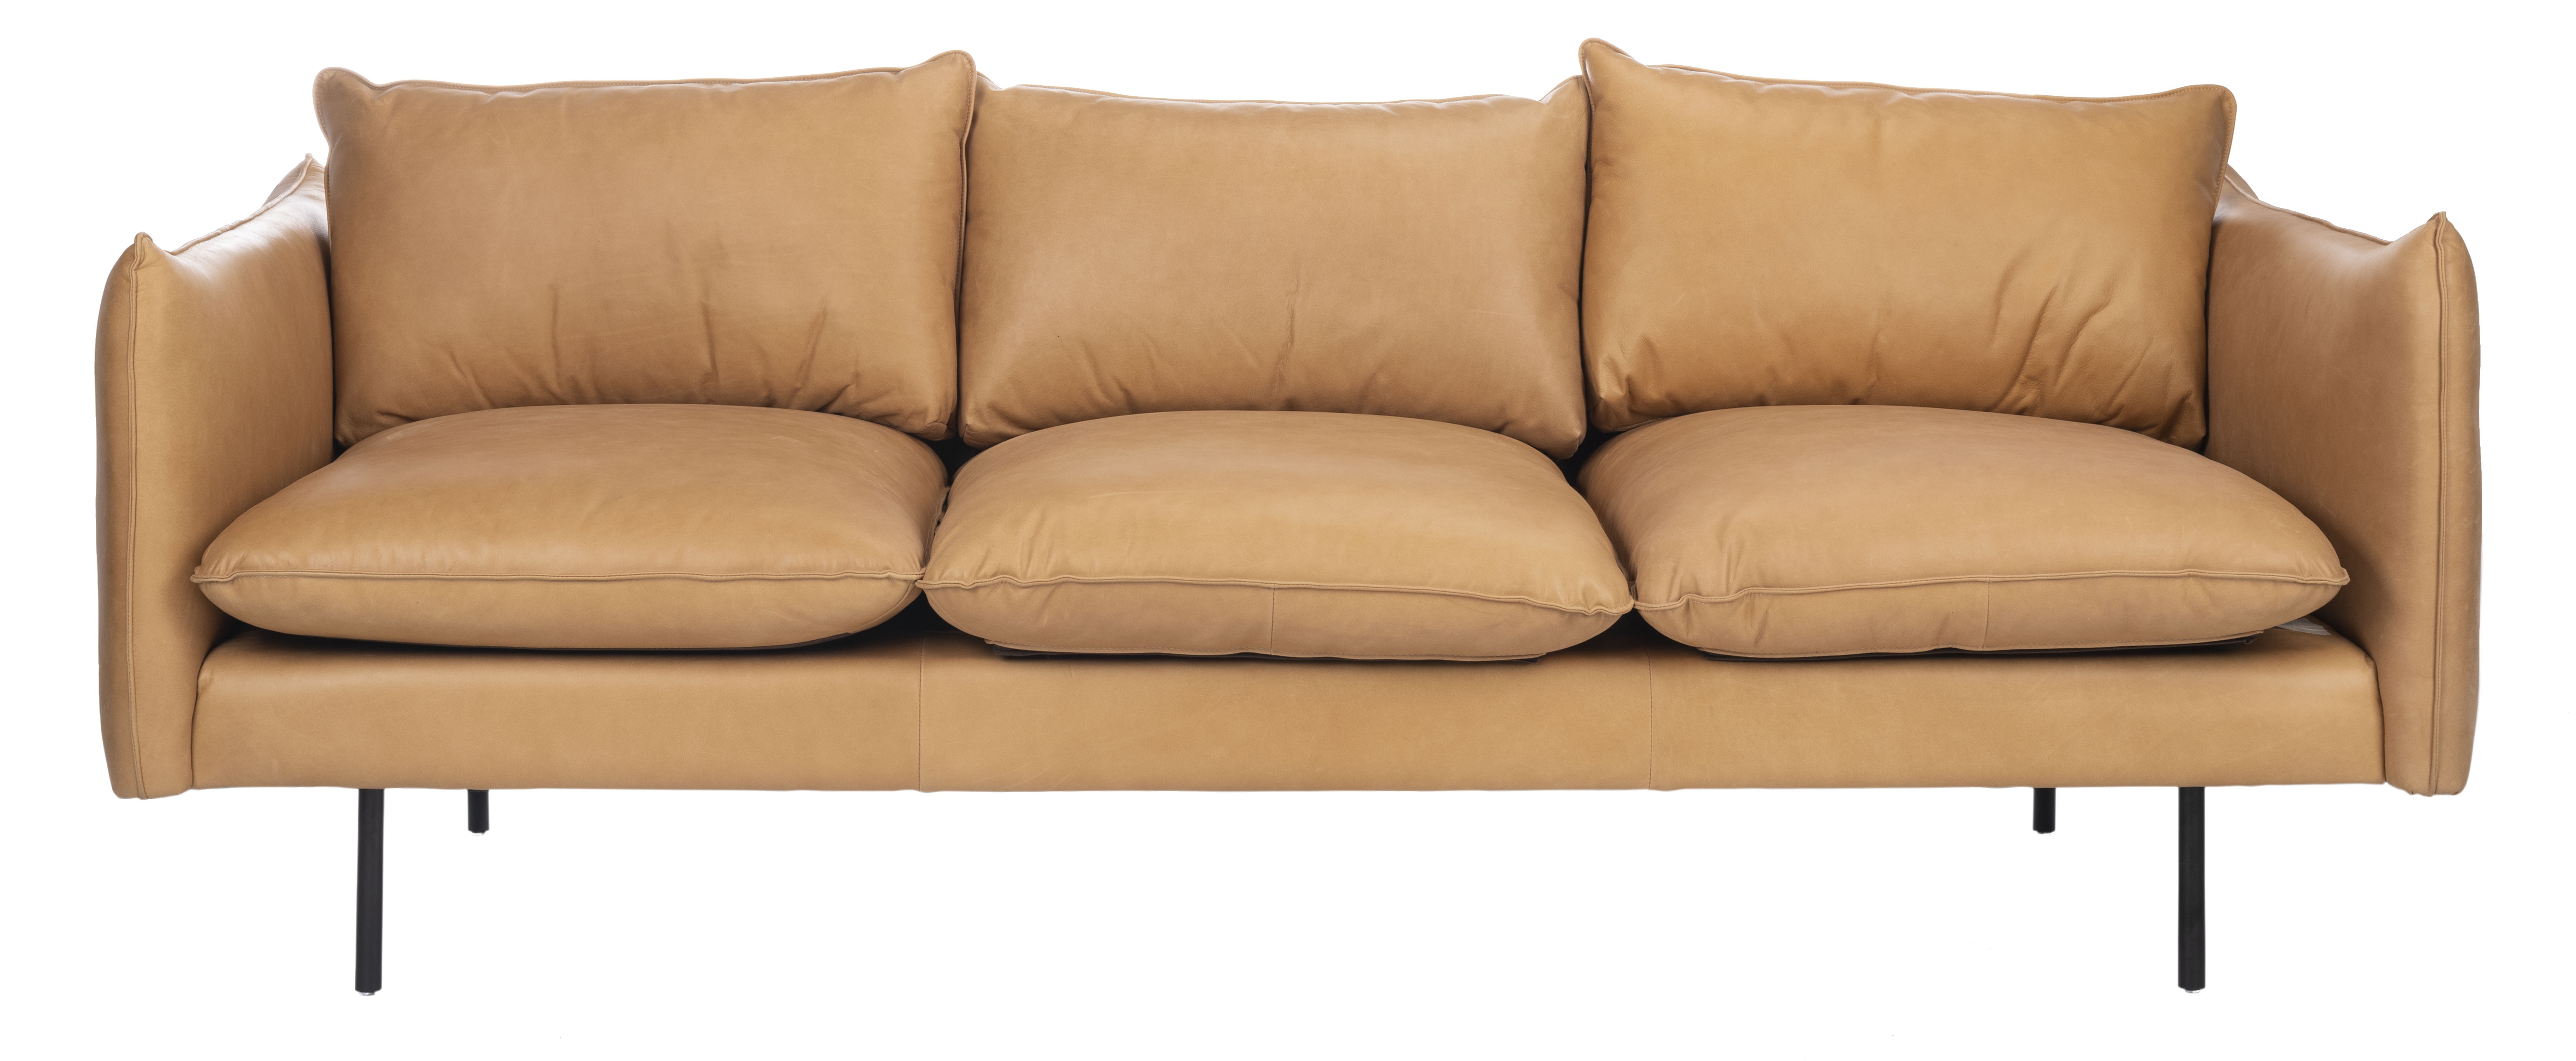 Gerlaich Italian Leather Sofa, Tan - Image 0